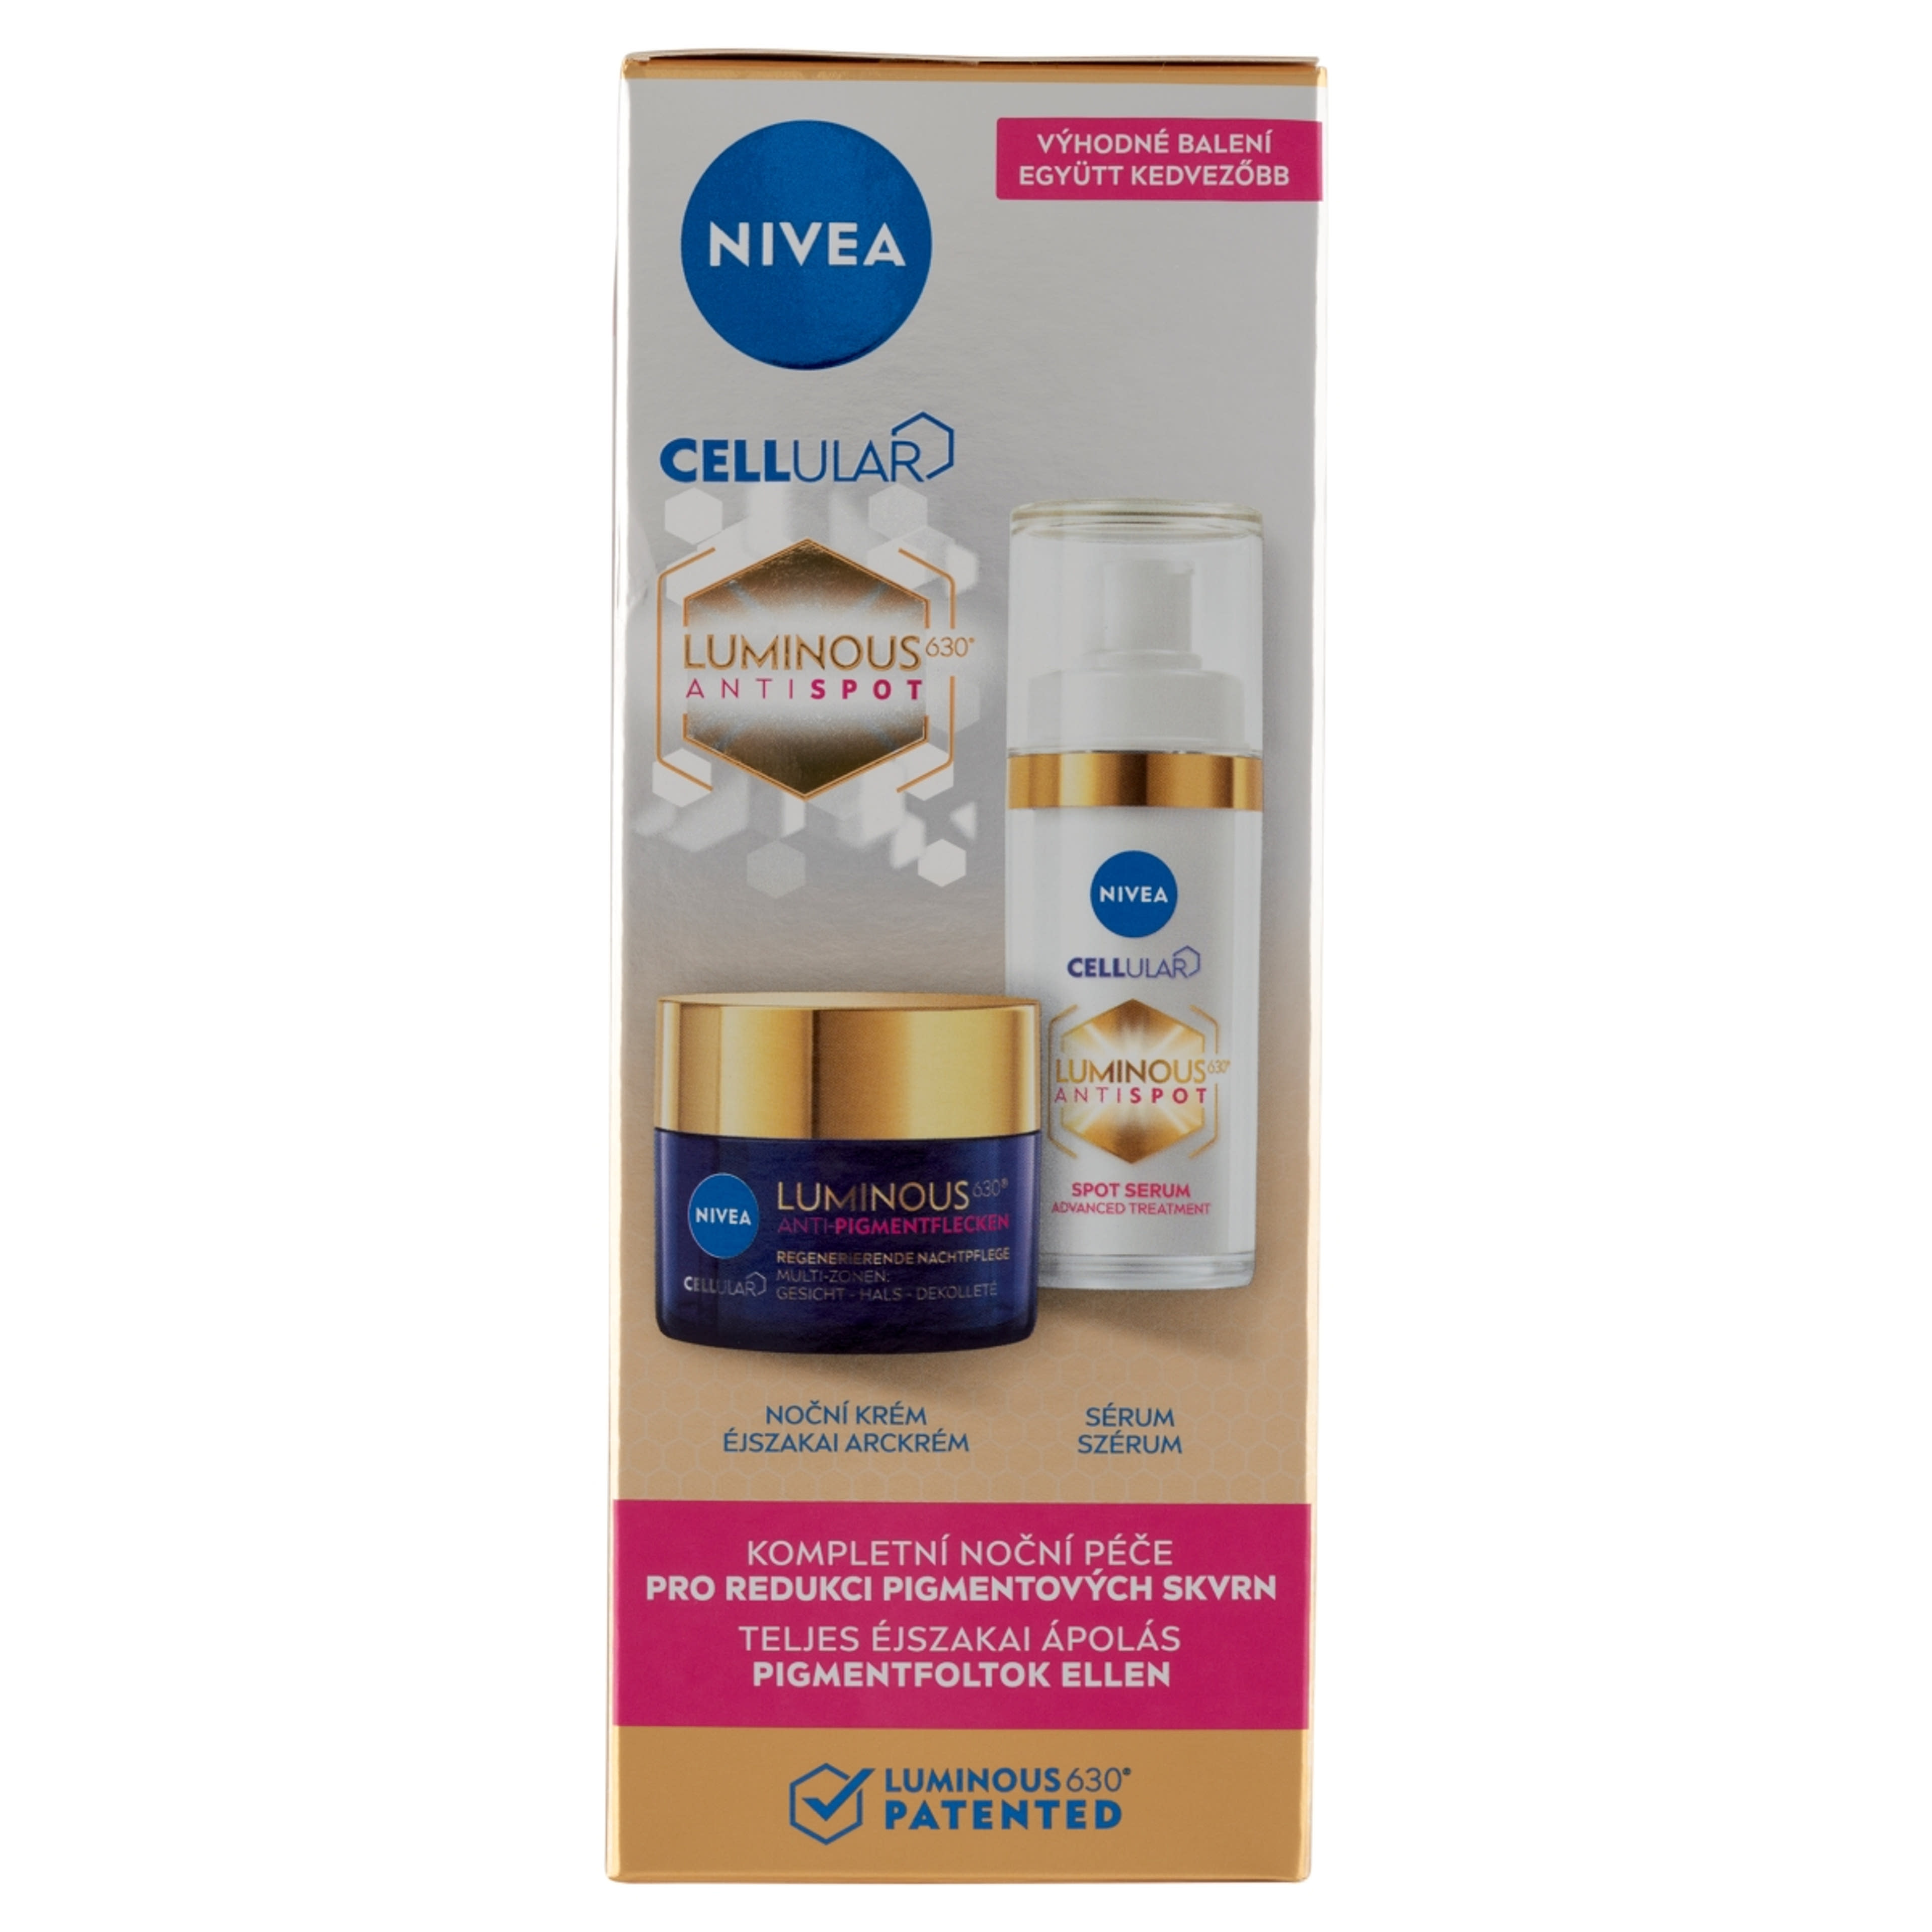 Nivea Cellular Luminous 630 pigmentfoltok ellei krém és szérum duopack 2 db - 80 ml